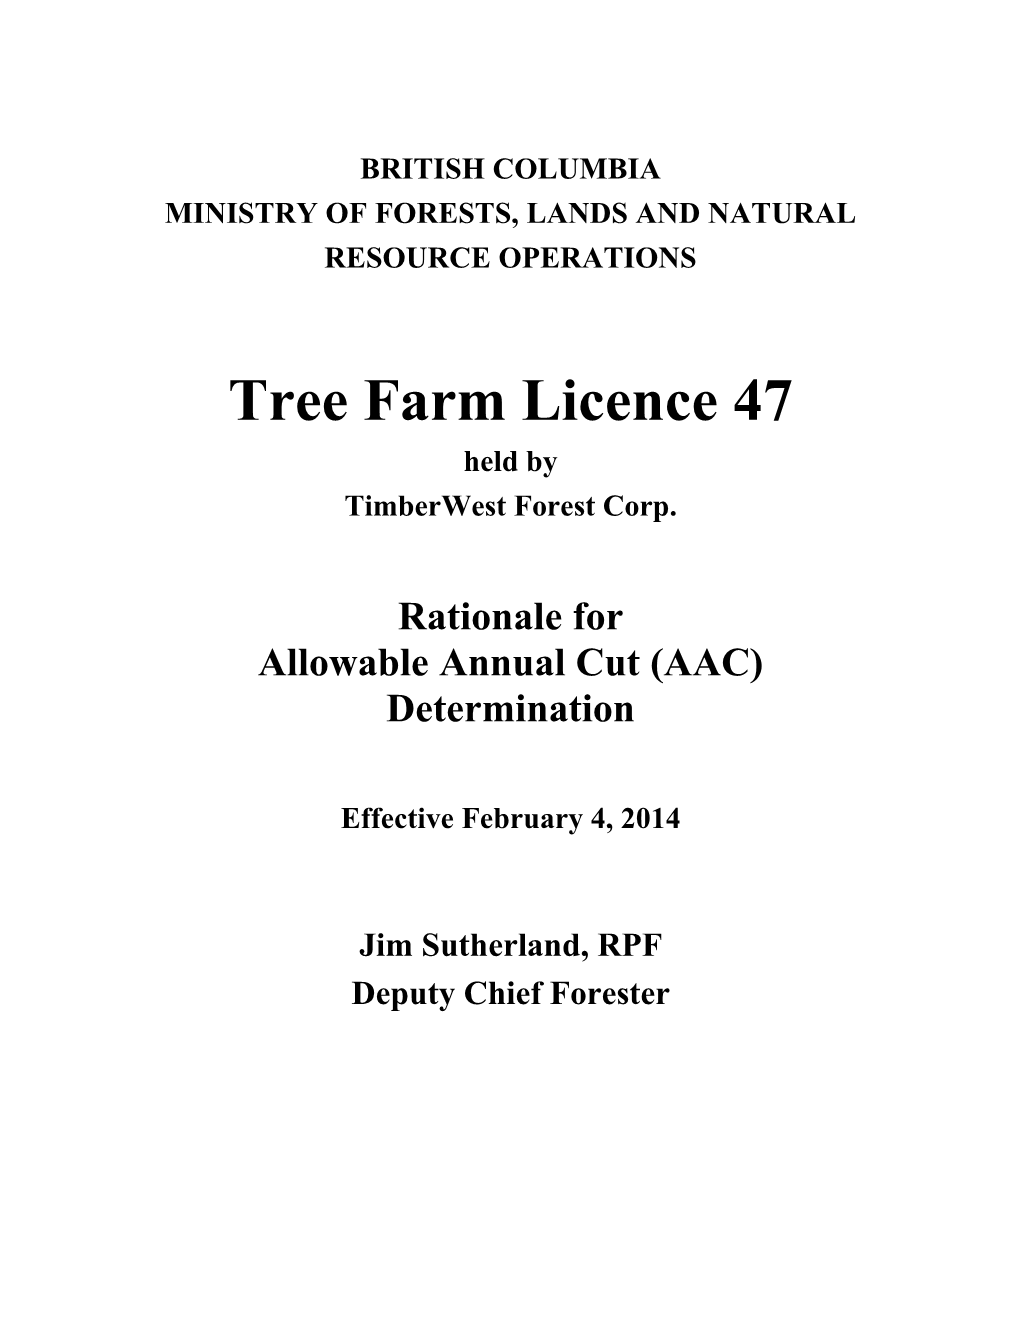 AAC Rationale (2014) (PDF)